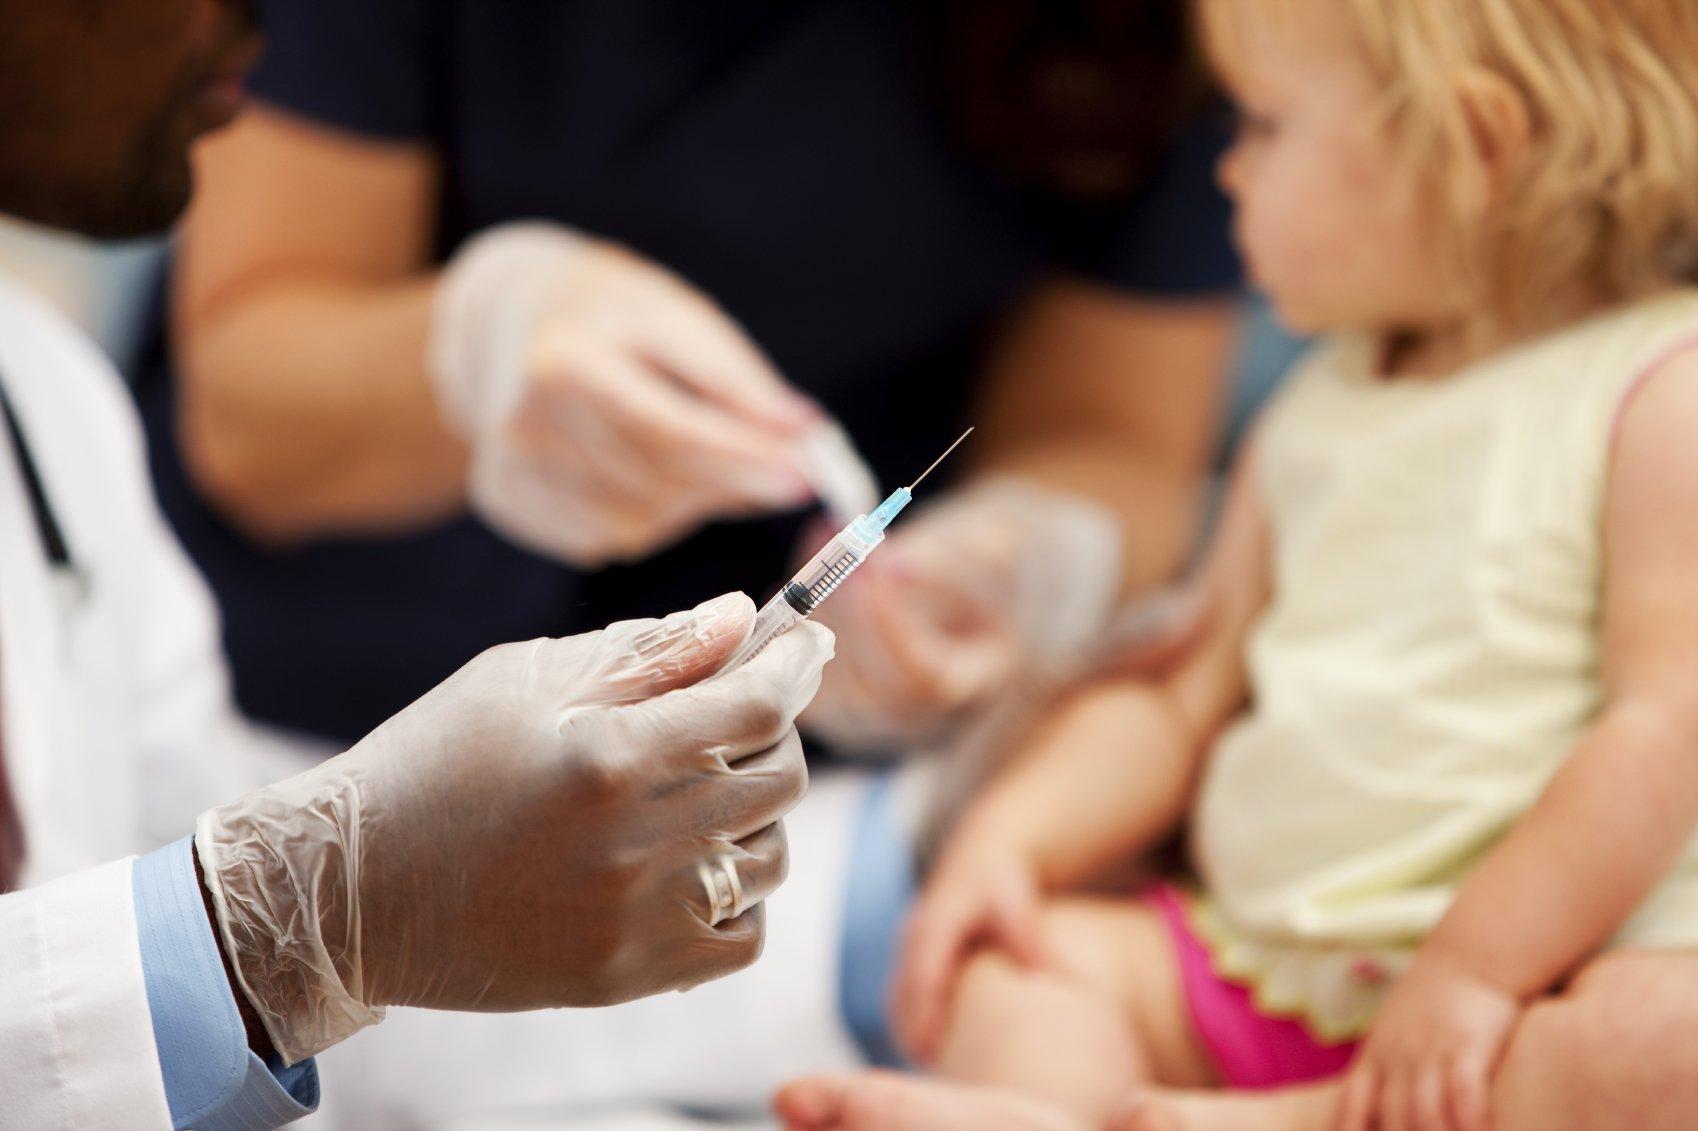 Развивающиеся вакцины. Прививки. Вакцинация детей. Иммунизация детей. Гепатит а вакцинация детей.